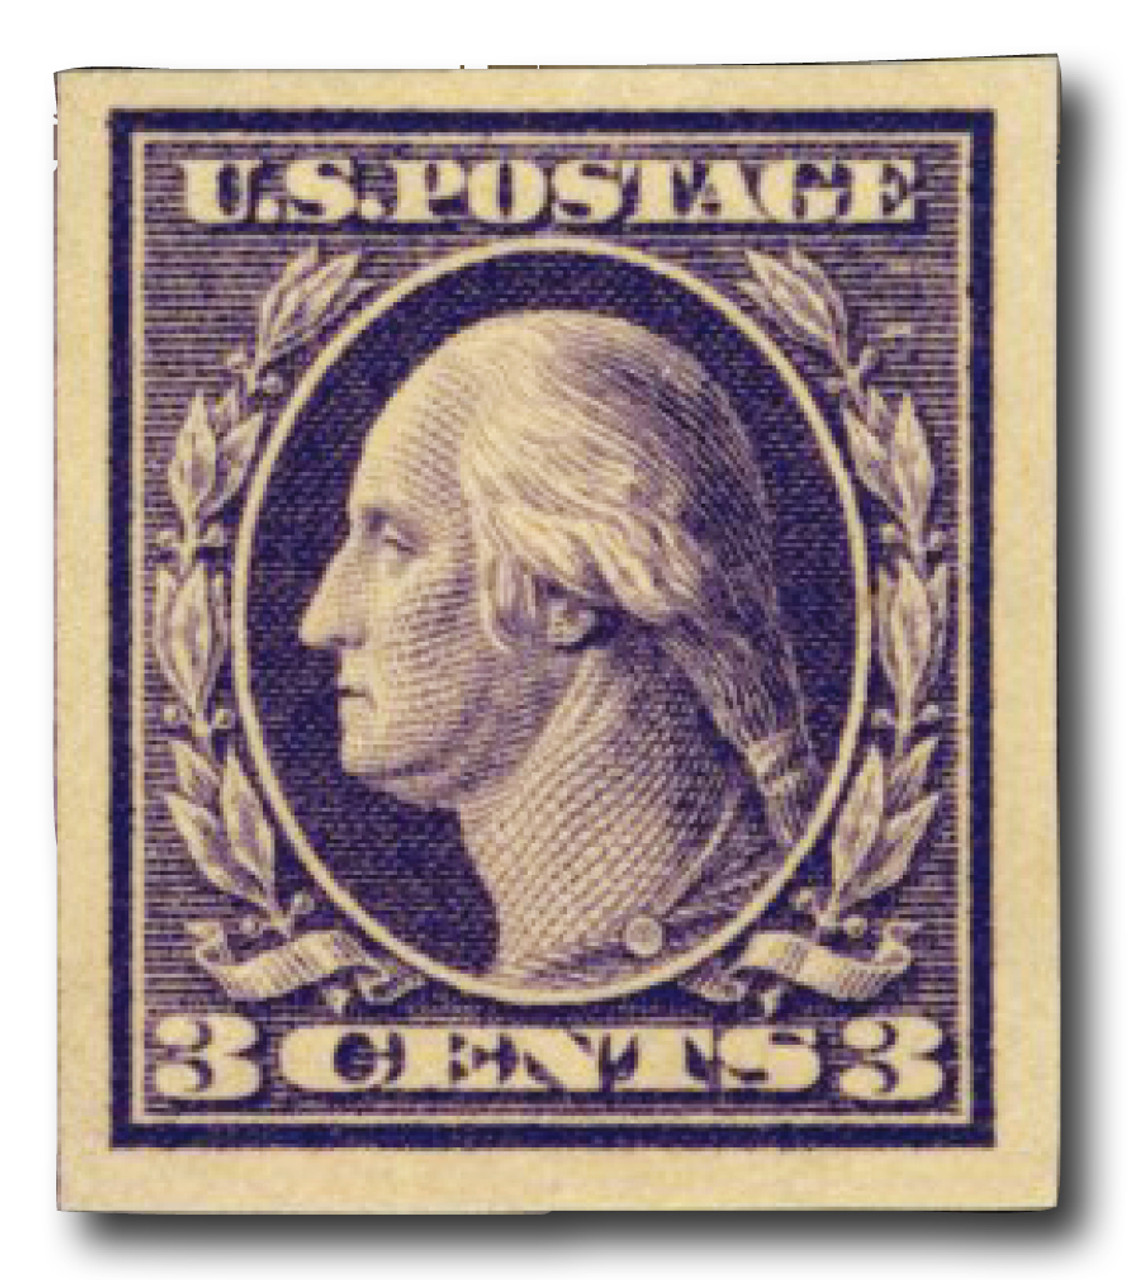 Wedding Rings PACK OF TEN 44¢ Postage Stamps Scott 4397